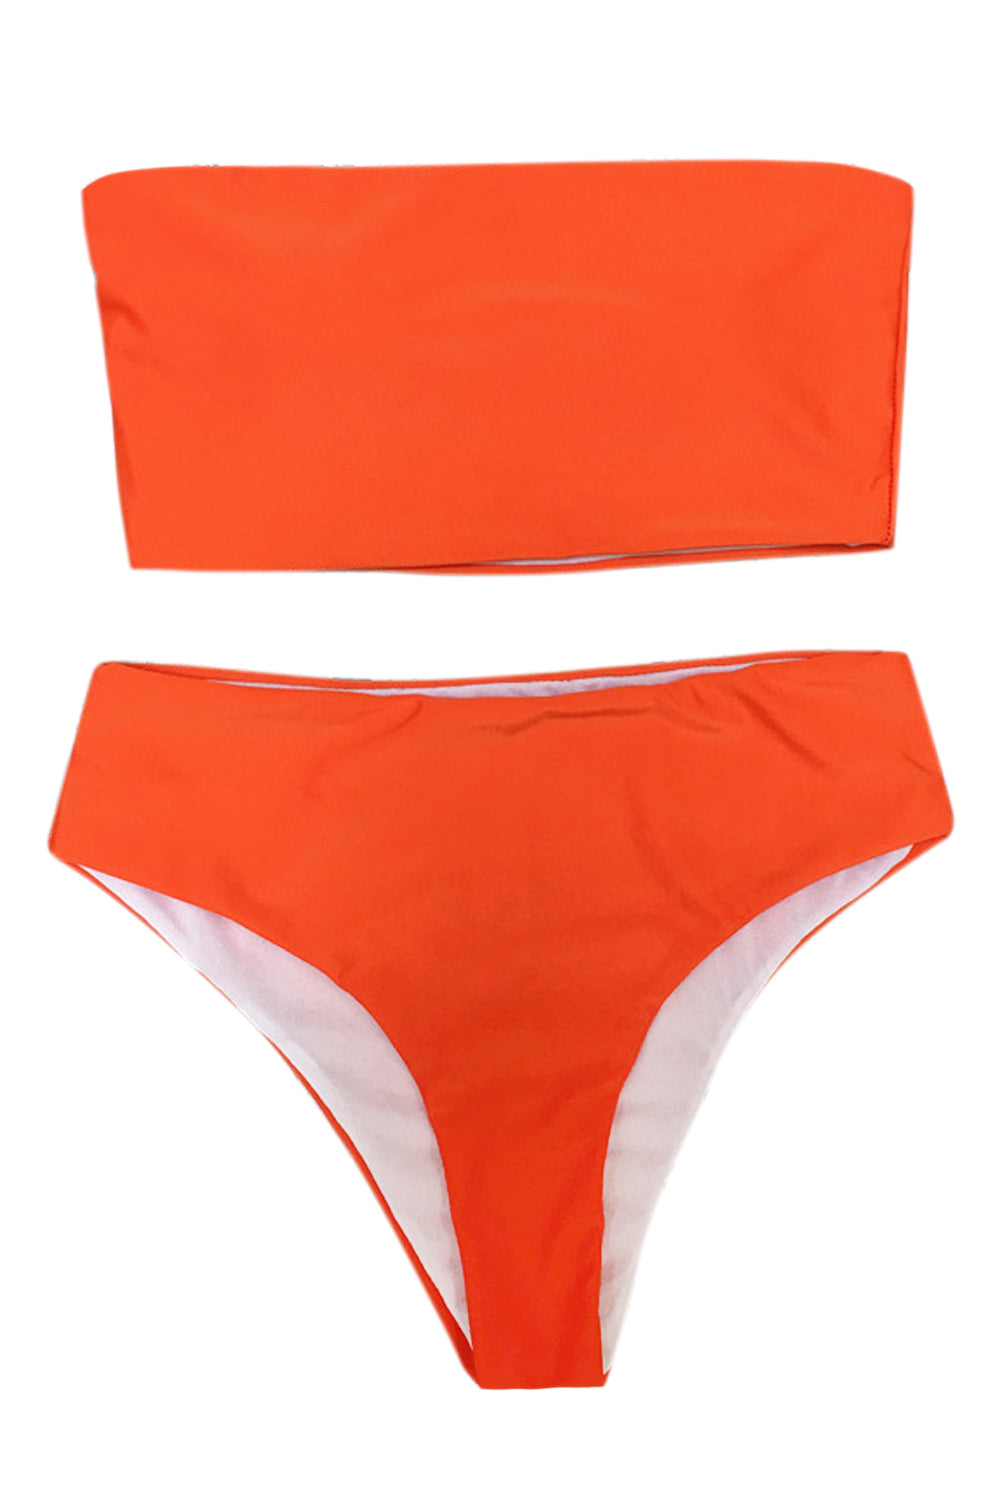 Iyasson Solid Color Plain Strapless Bikini Set